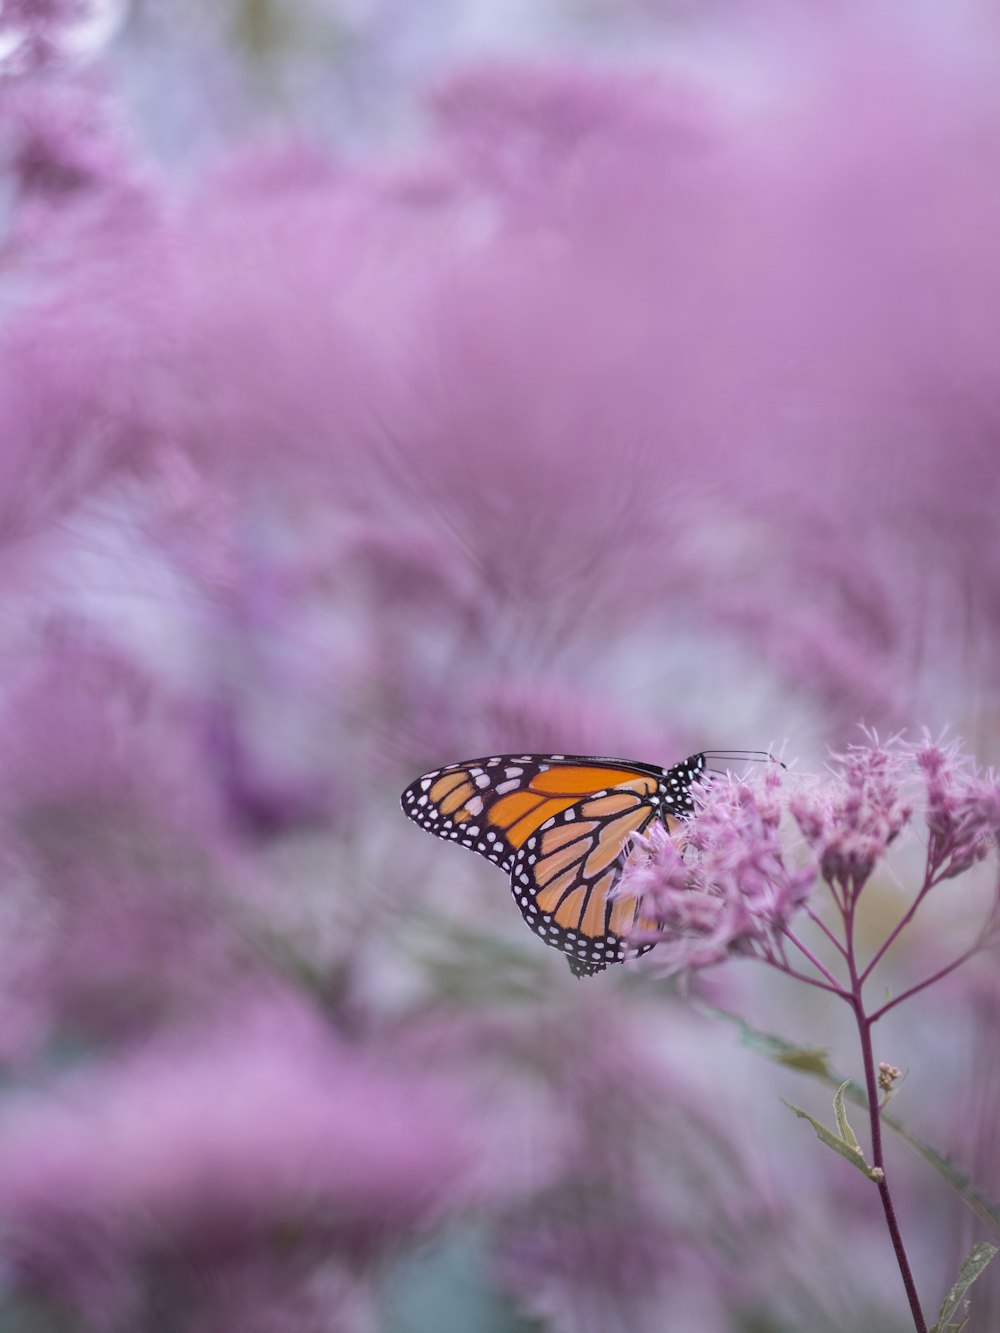 borboleta marrom e branca na flor de pétalas roxas